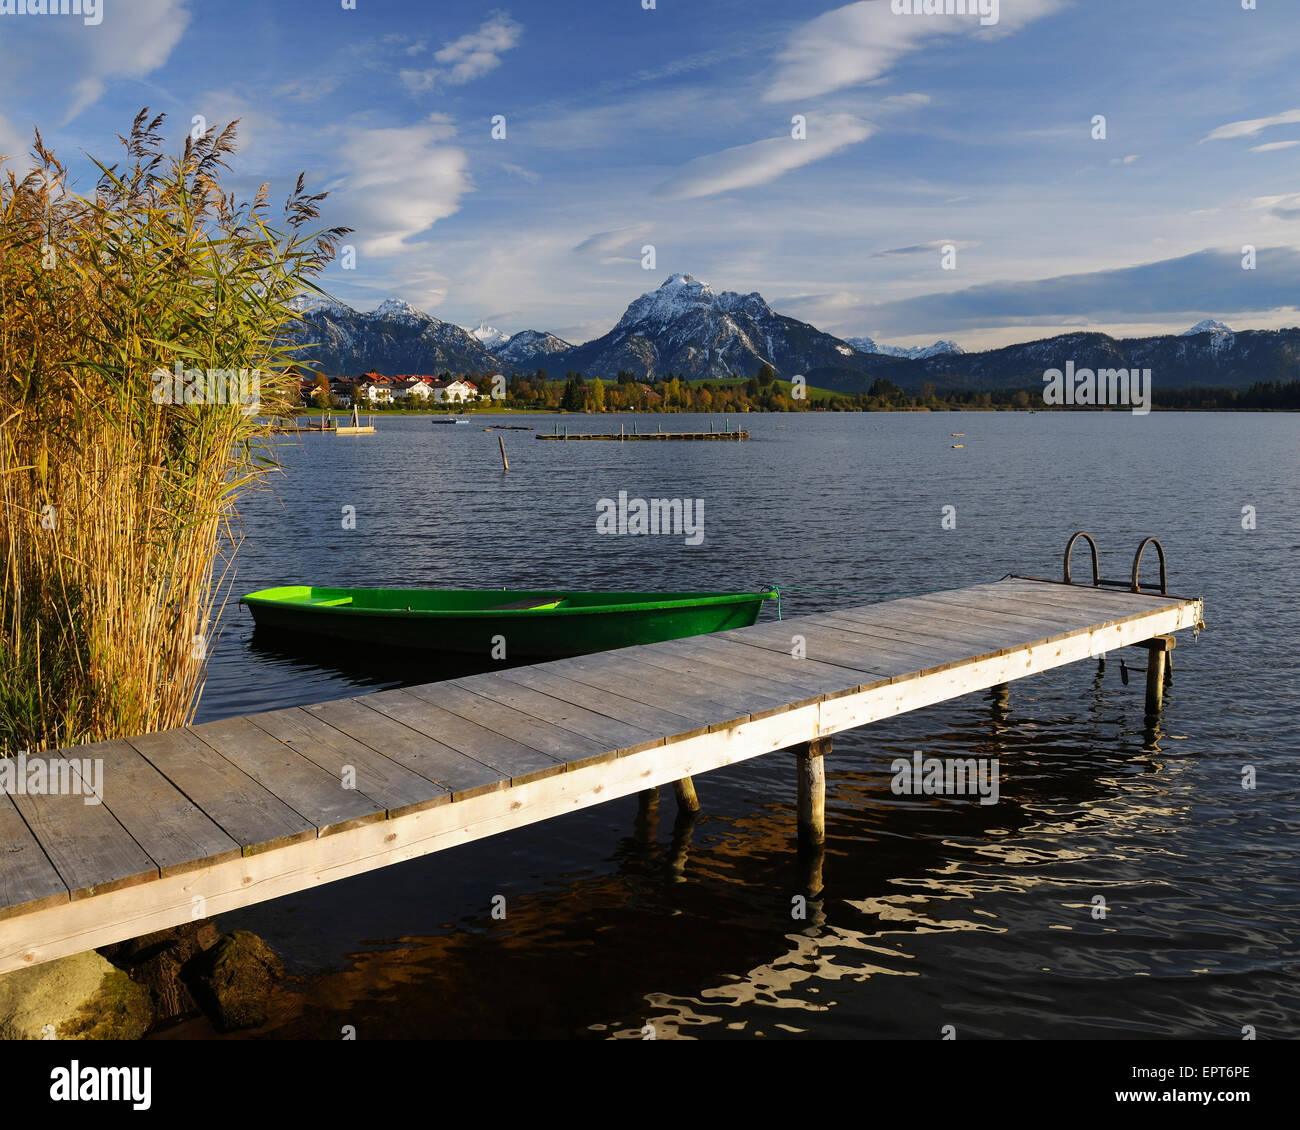 Pontile in legno, Hopfen am See, Lago Hopfensee, Baviera, Germania Foto Stock